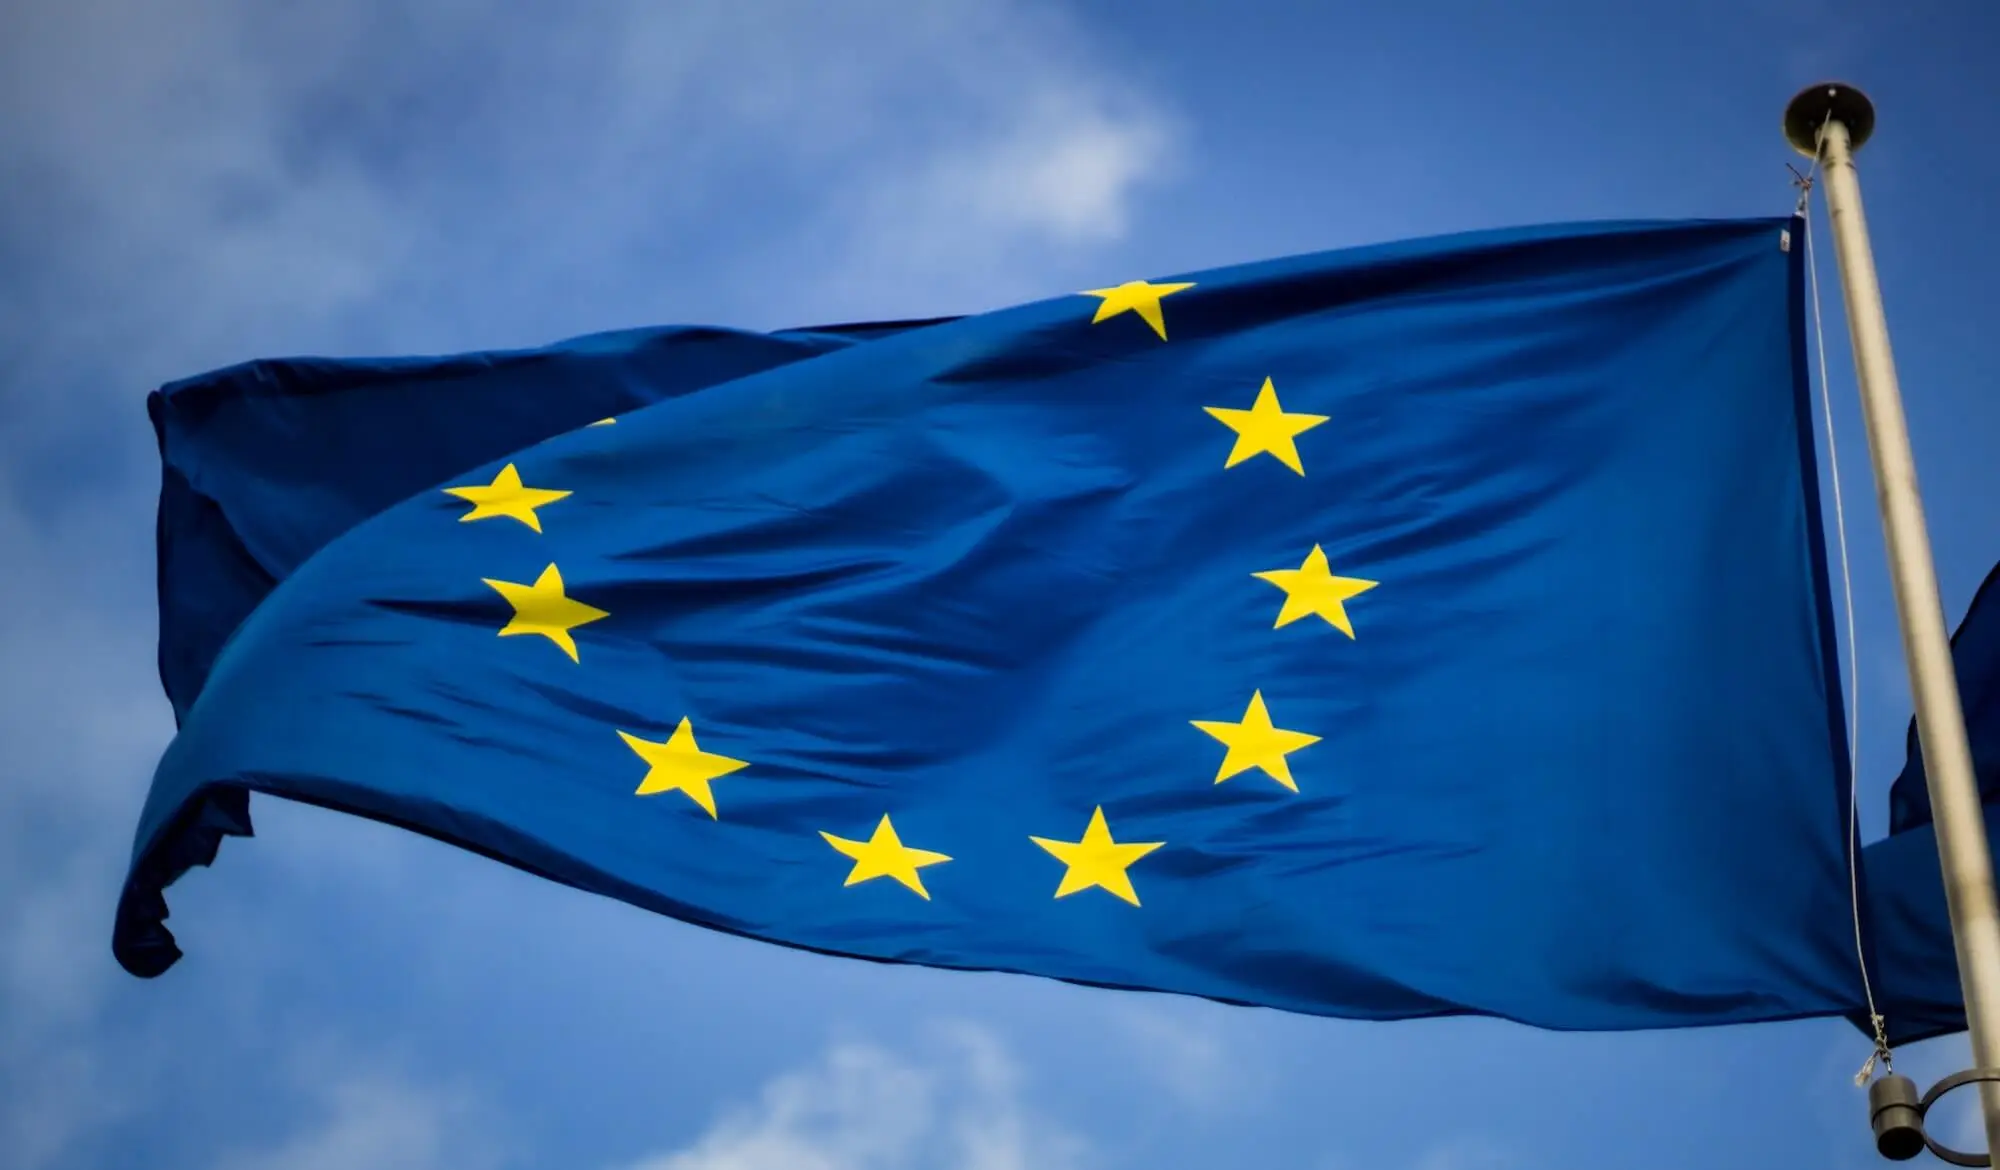 New EU Regulations Limit Transactions Over €1k